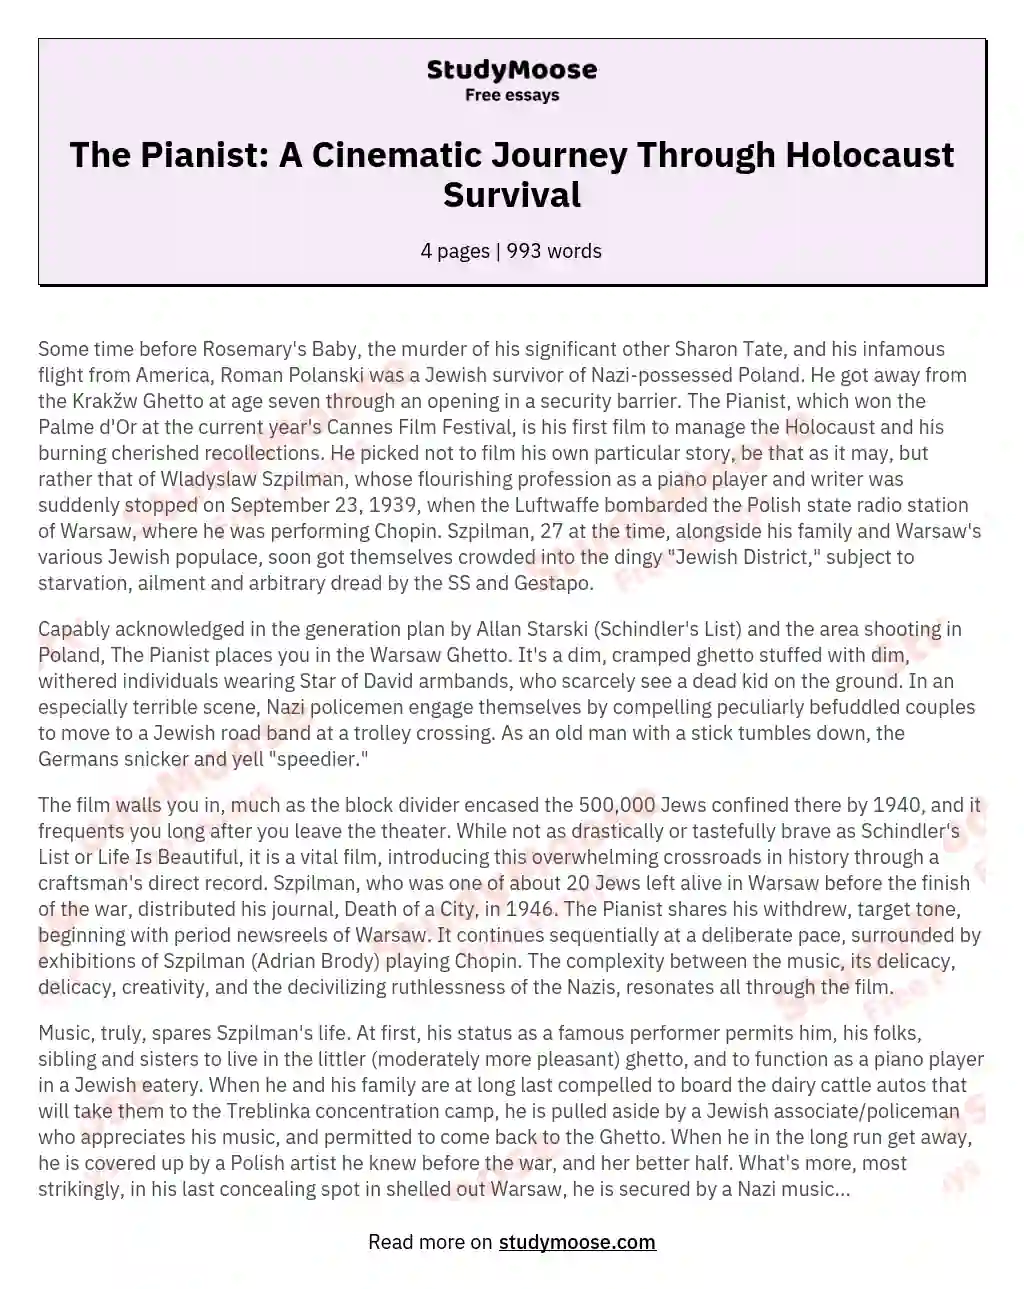 The Pianist: A Cinematic Journey Through Holocaust Survival essay